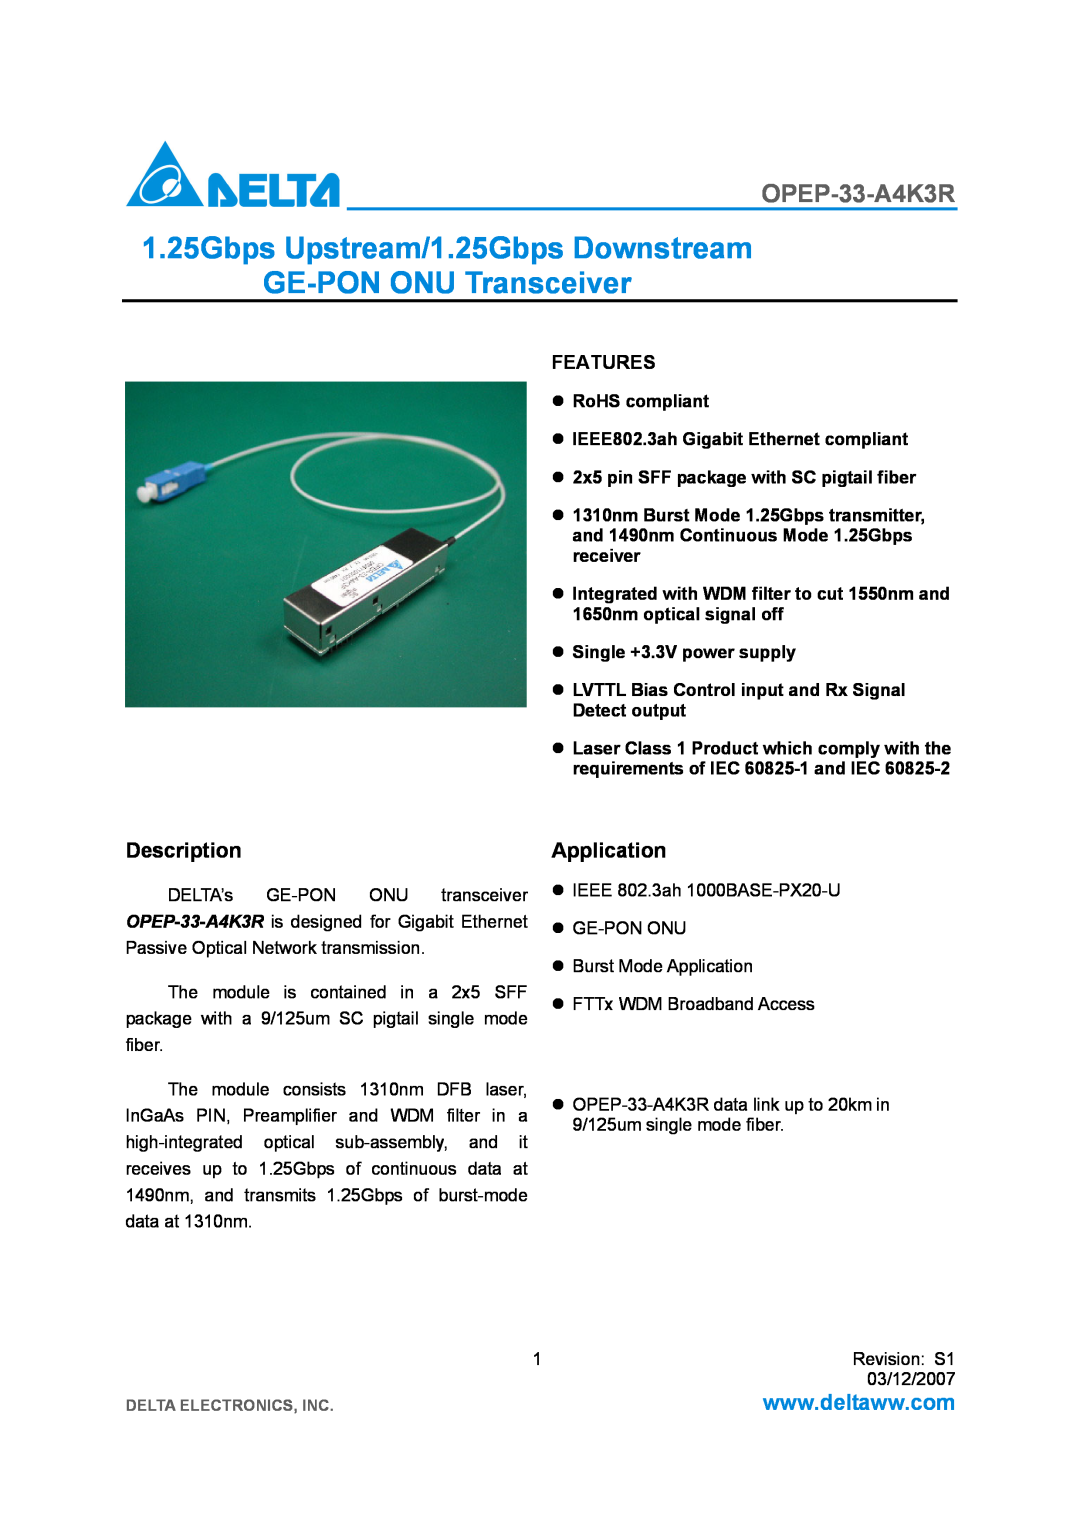 Delta Electronics OPEP-33-A4K3R manual Description, Application, Features 